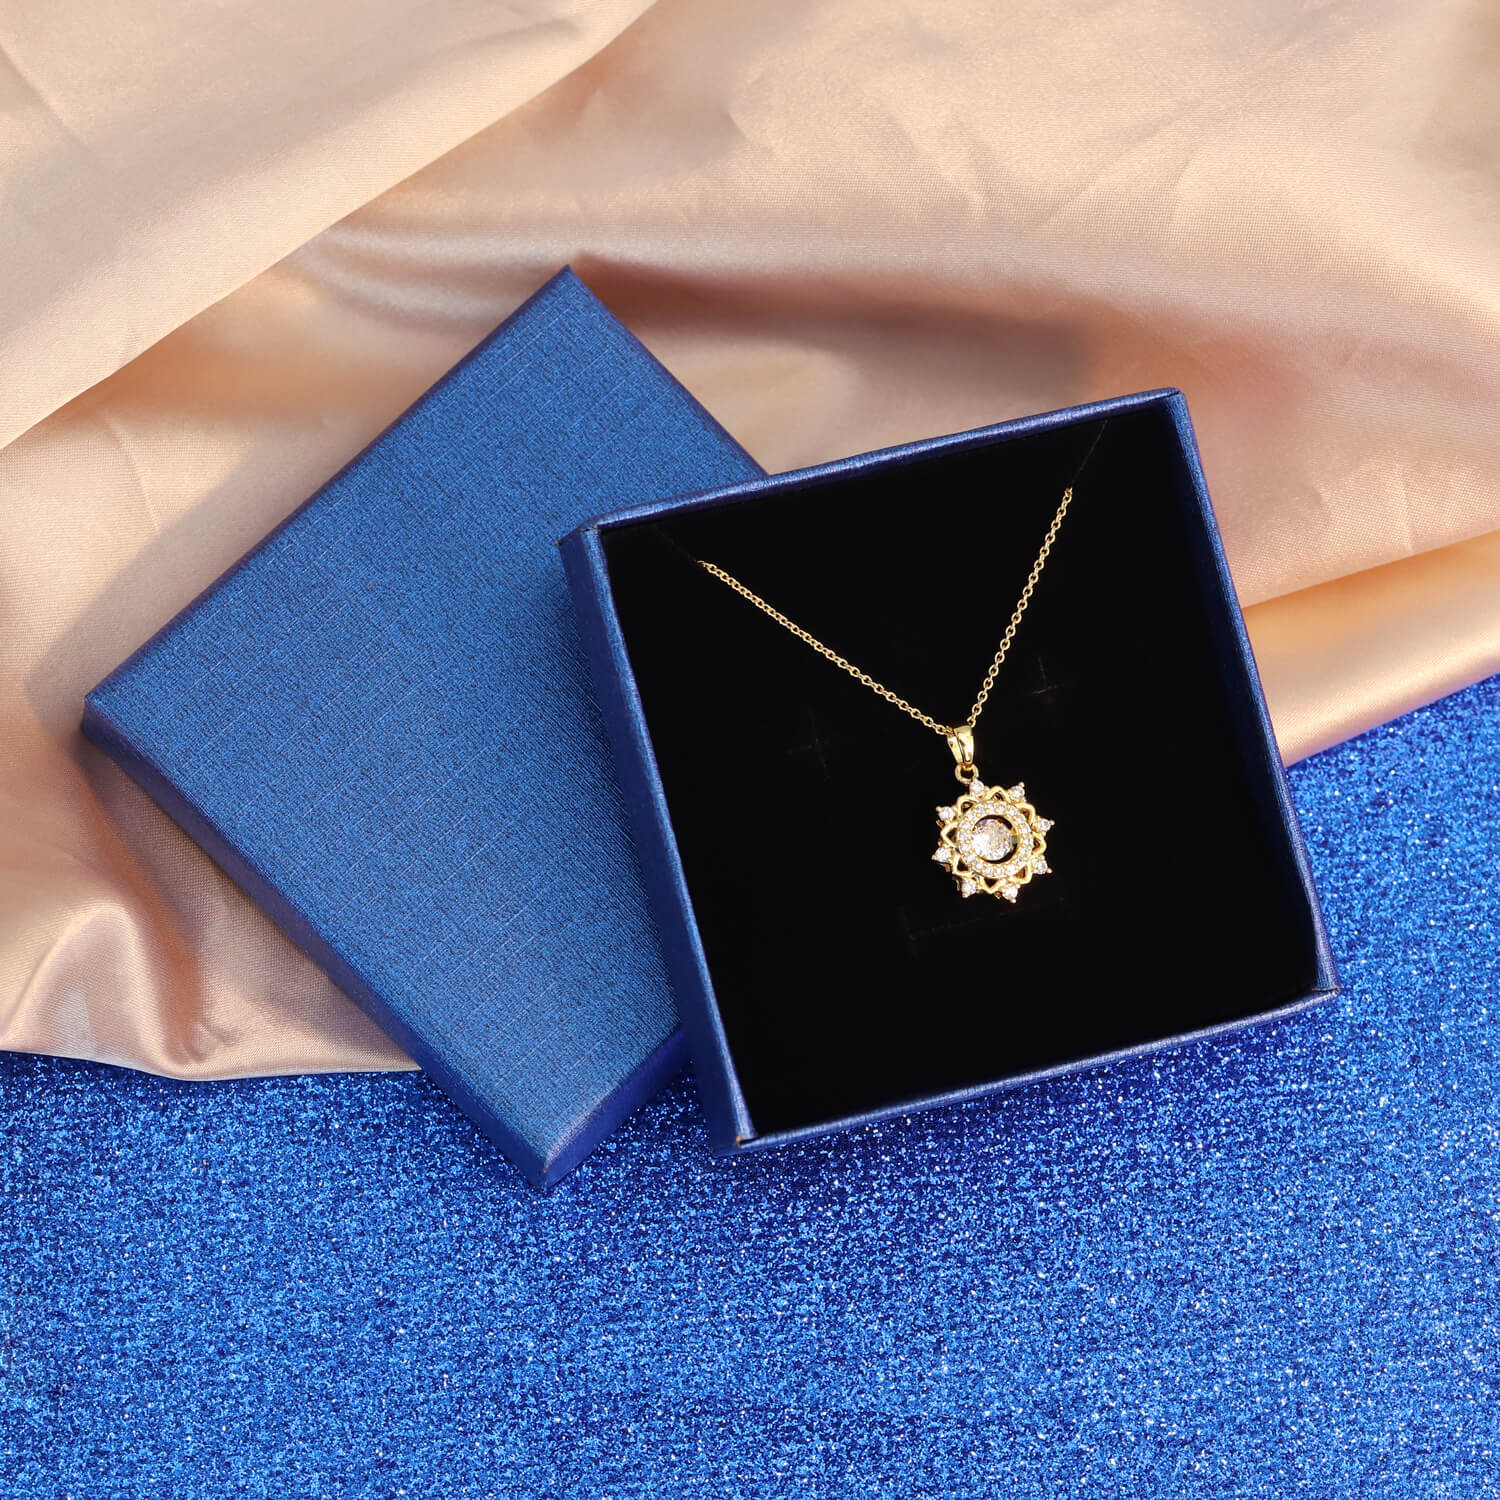 Unique Design, "Beating Heart" Diamond Necklace, Charming!